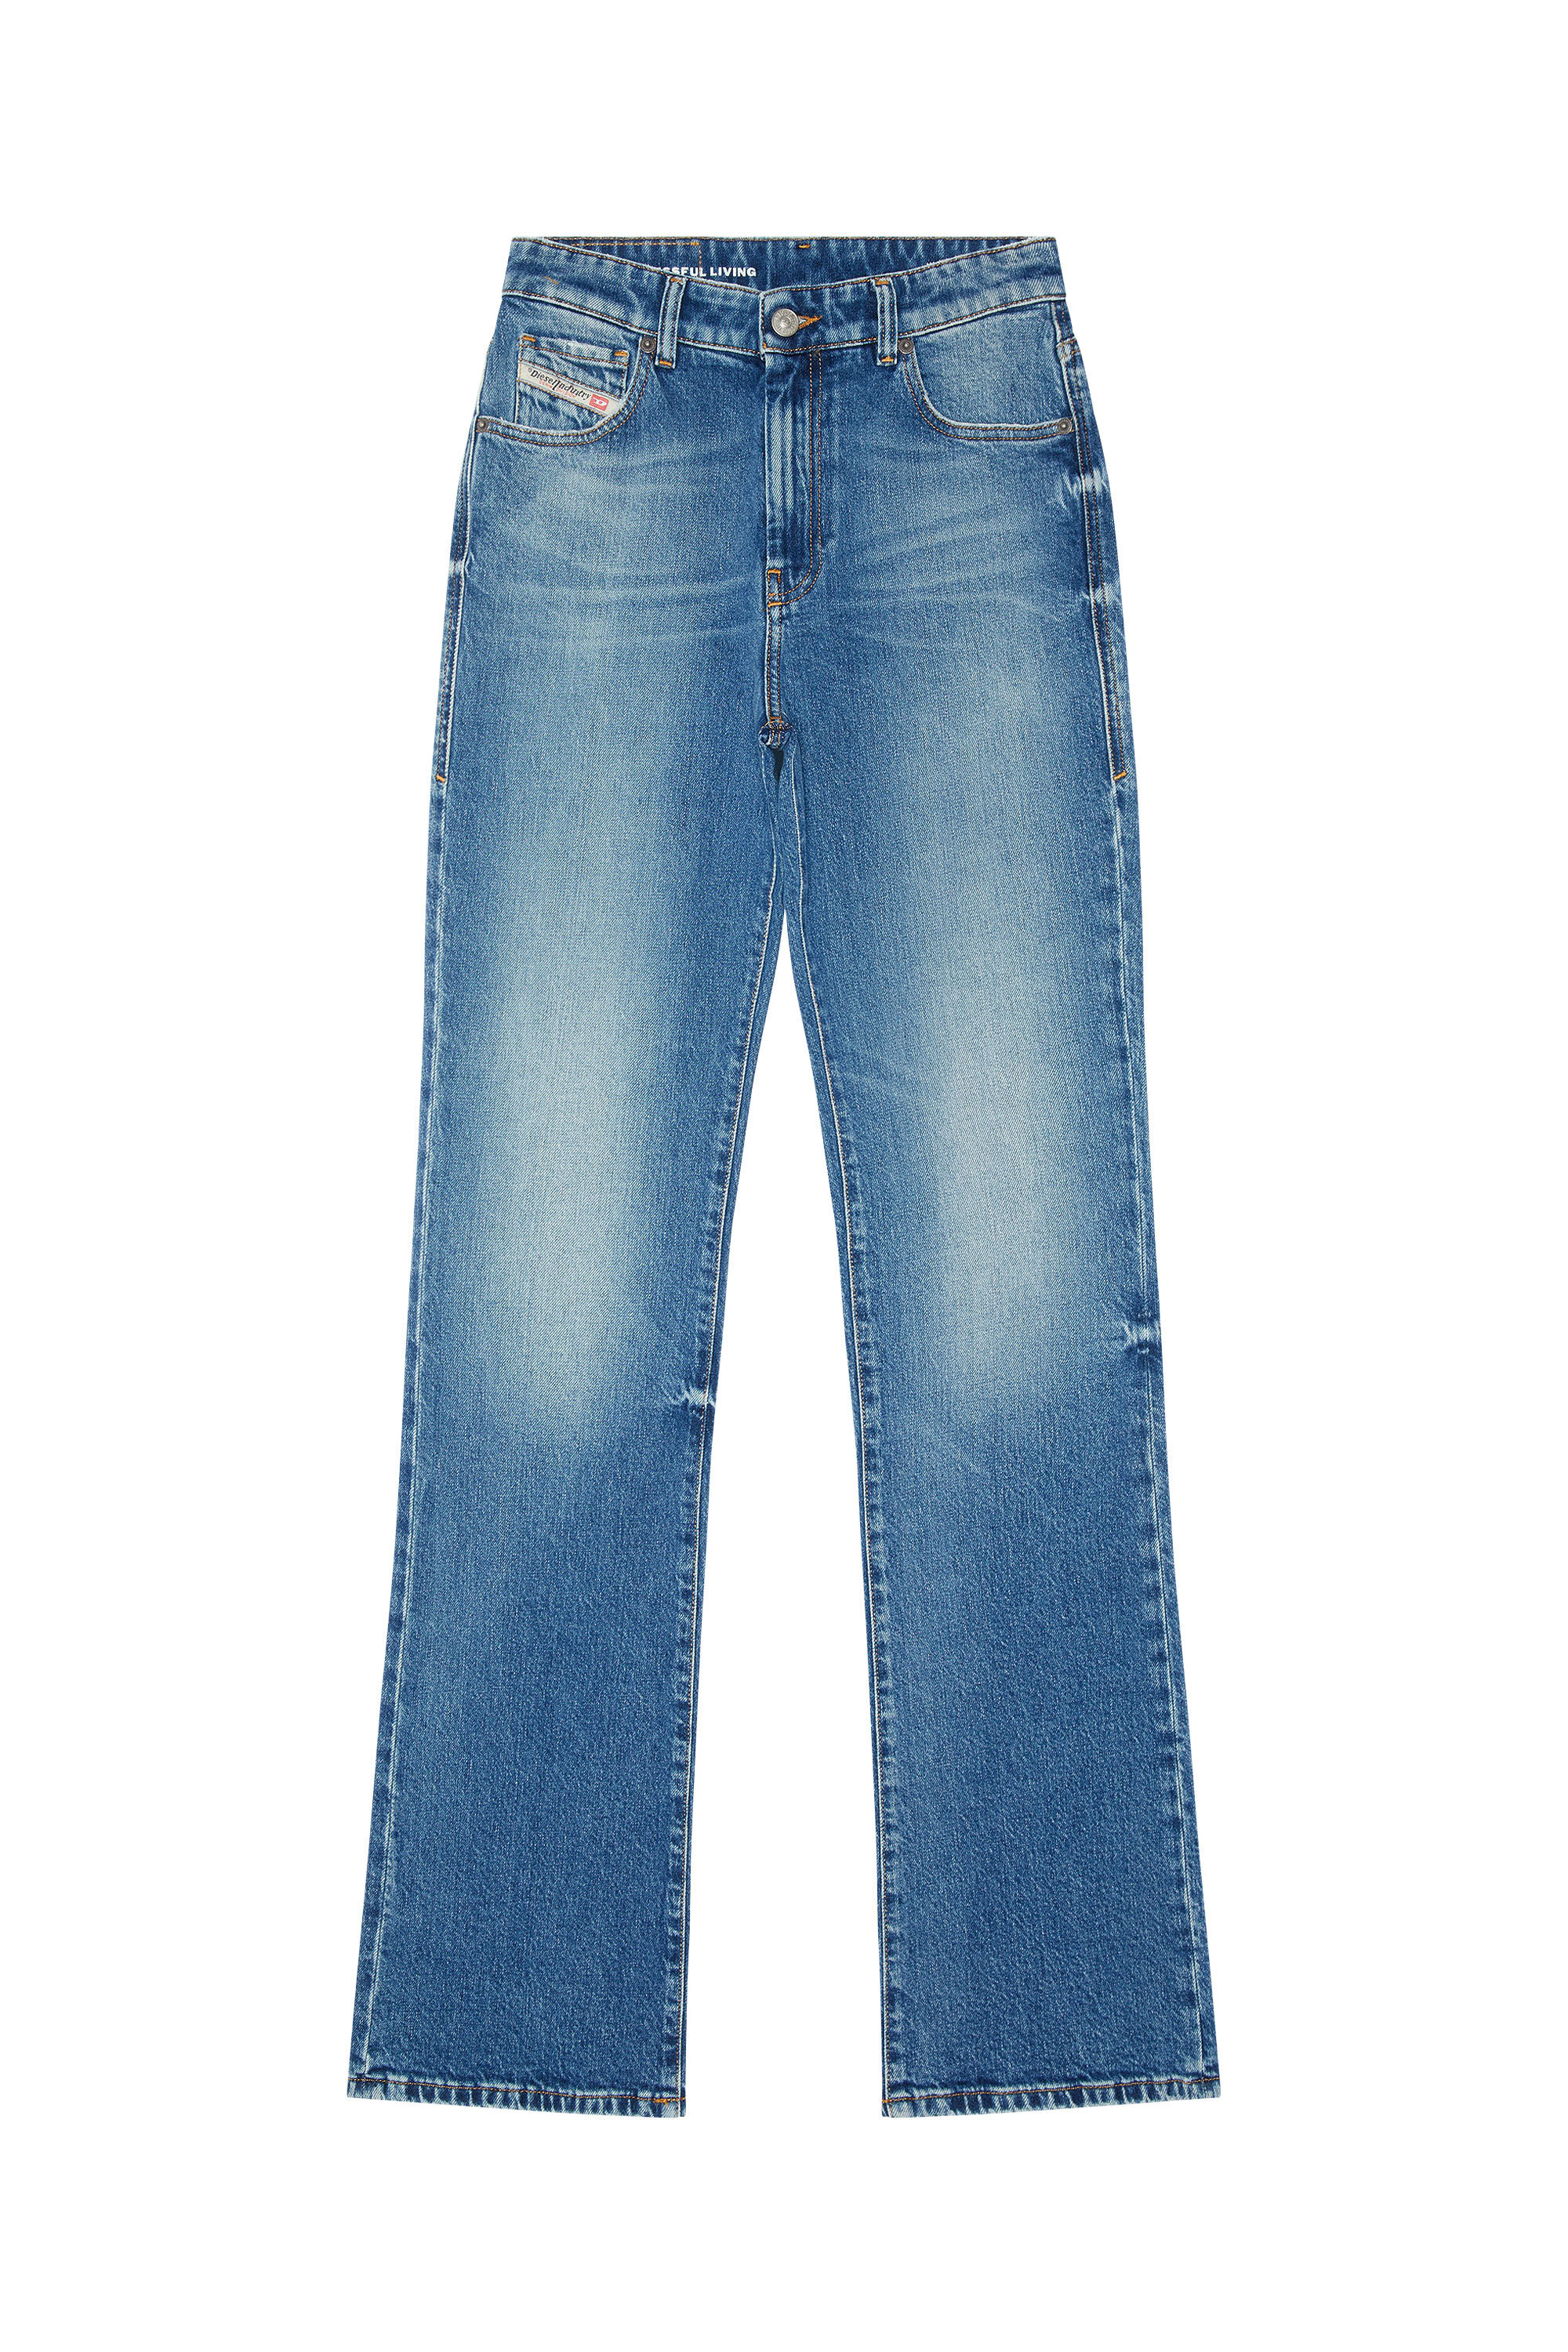 Women's Bootcut and Flare Jeans | Medium blue | Diesel 2003 D-Escription